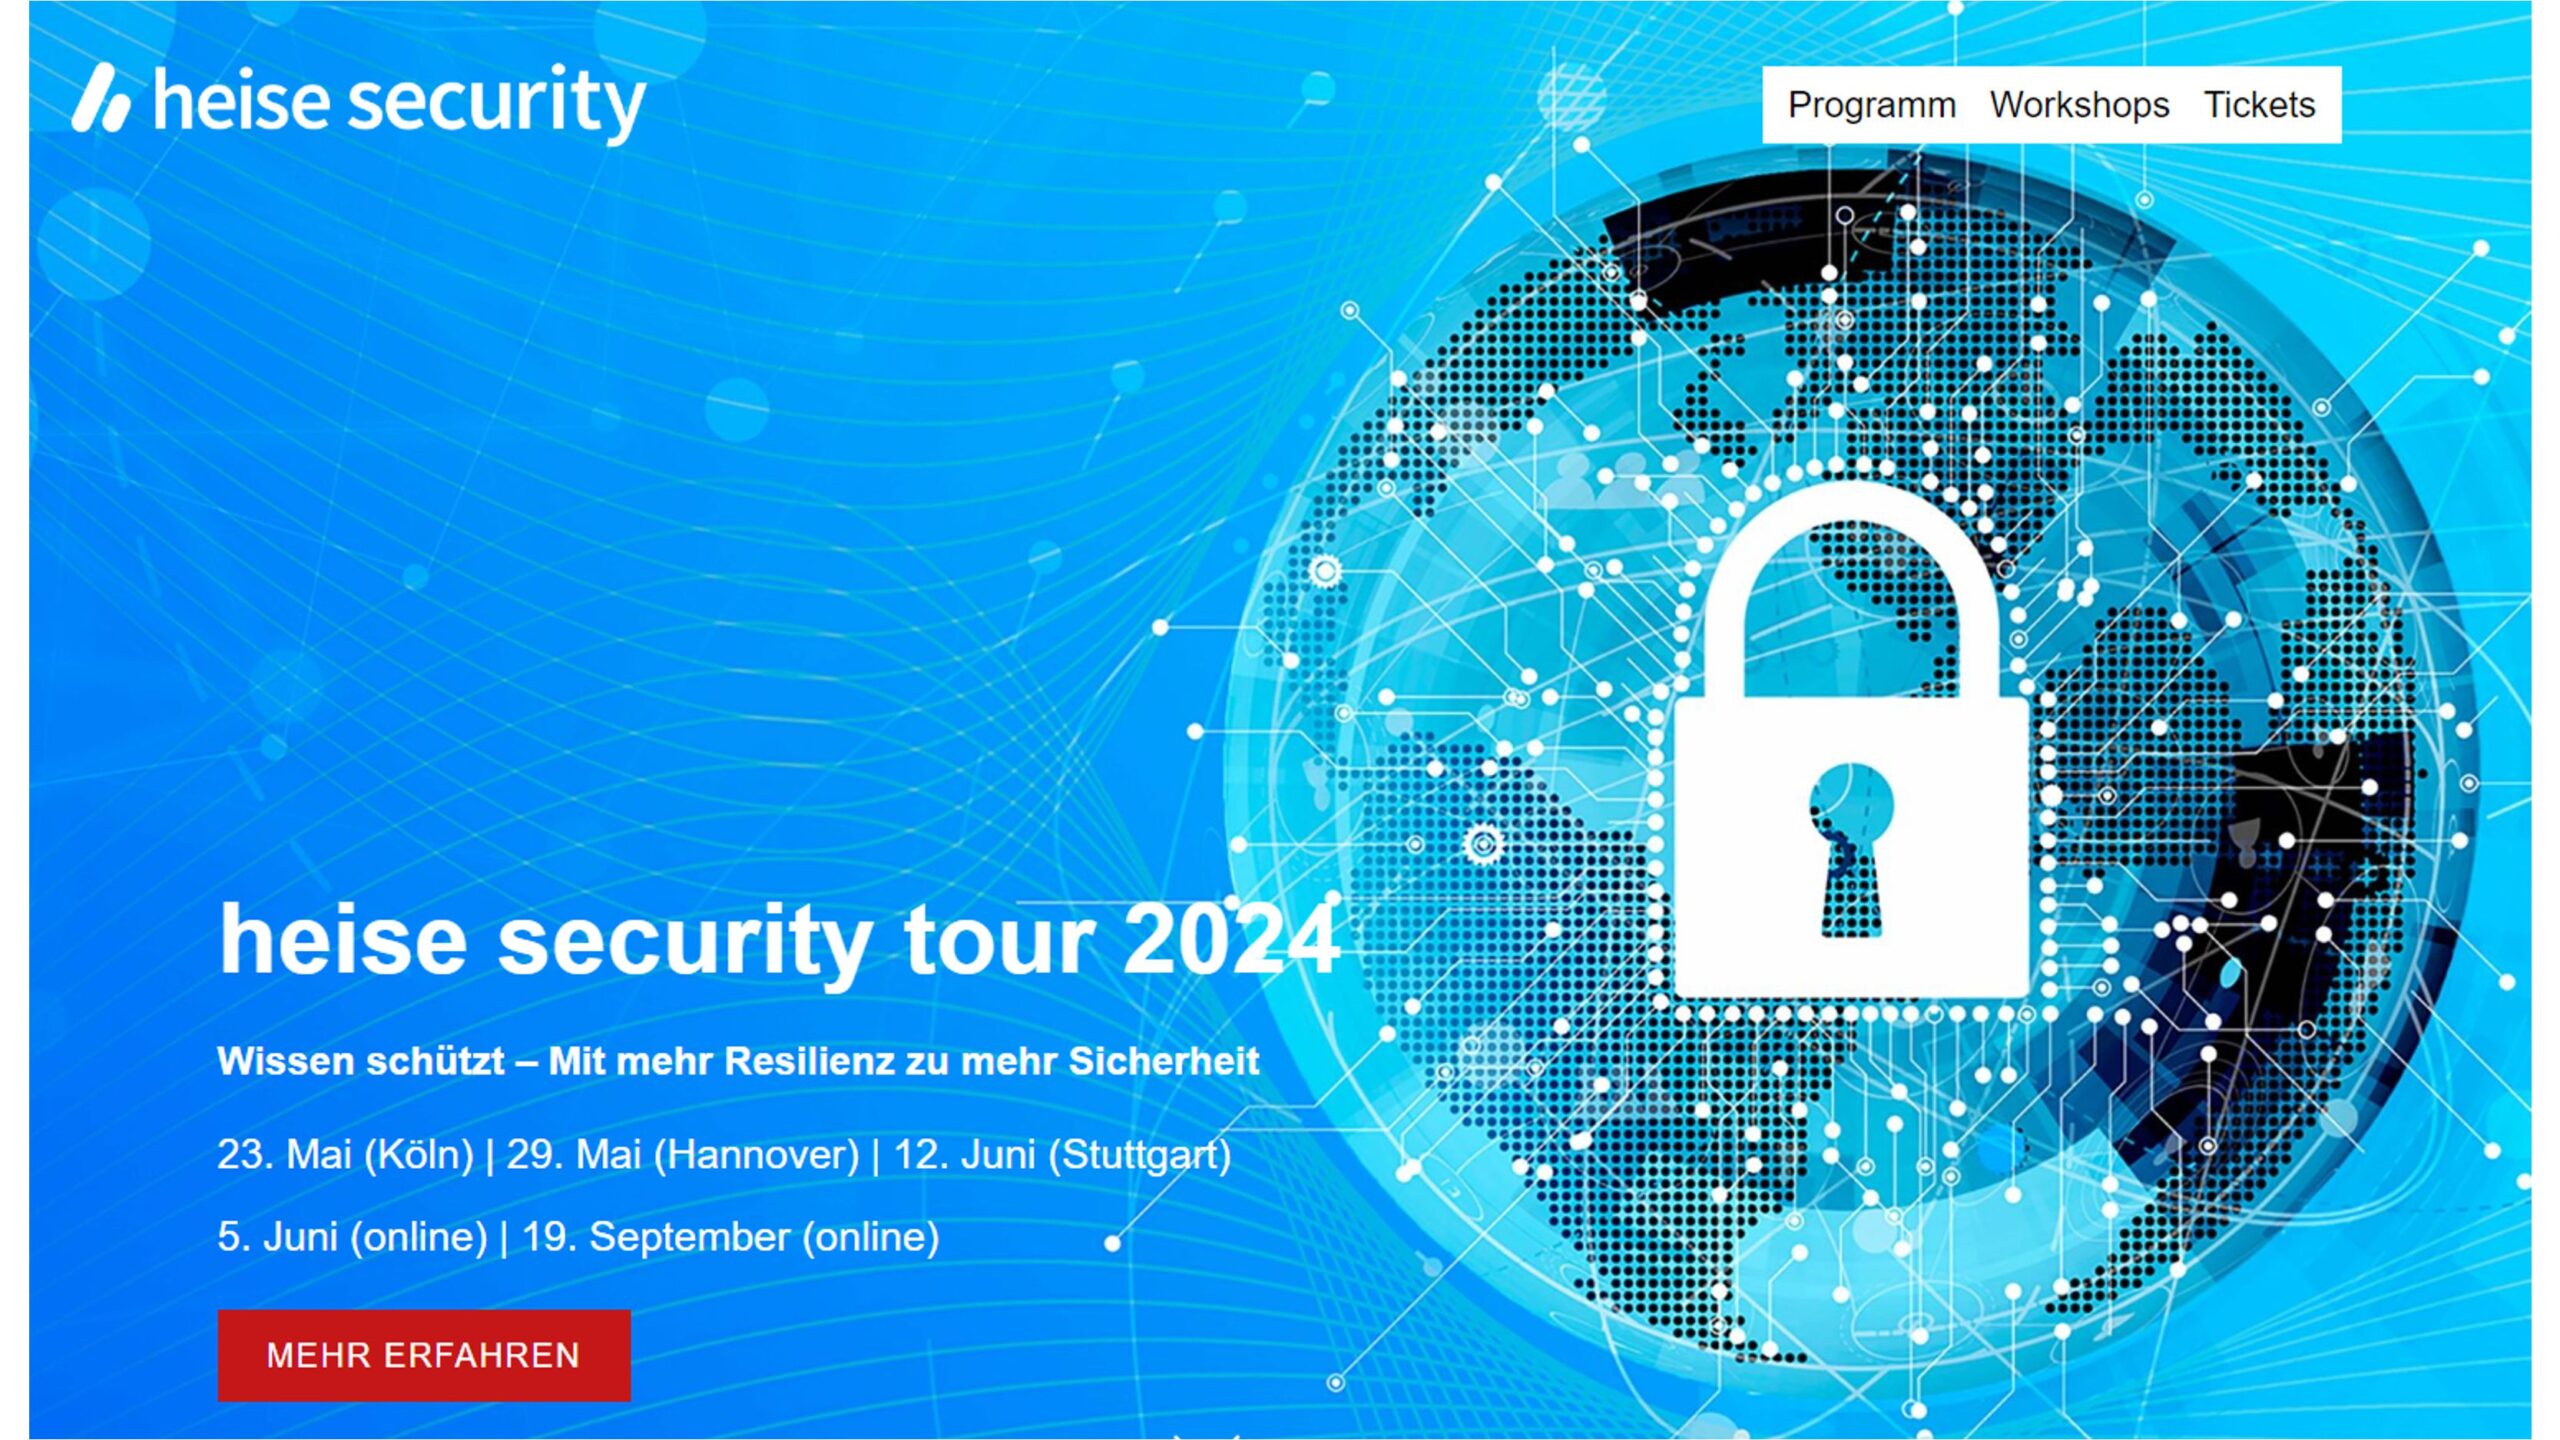 heise security tour 2024